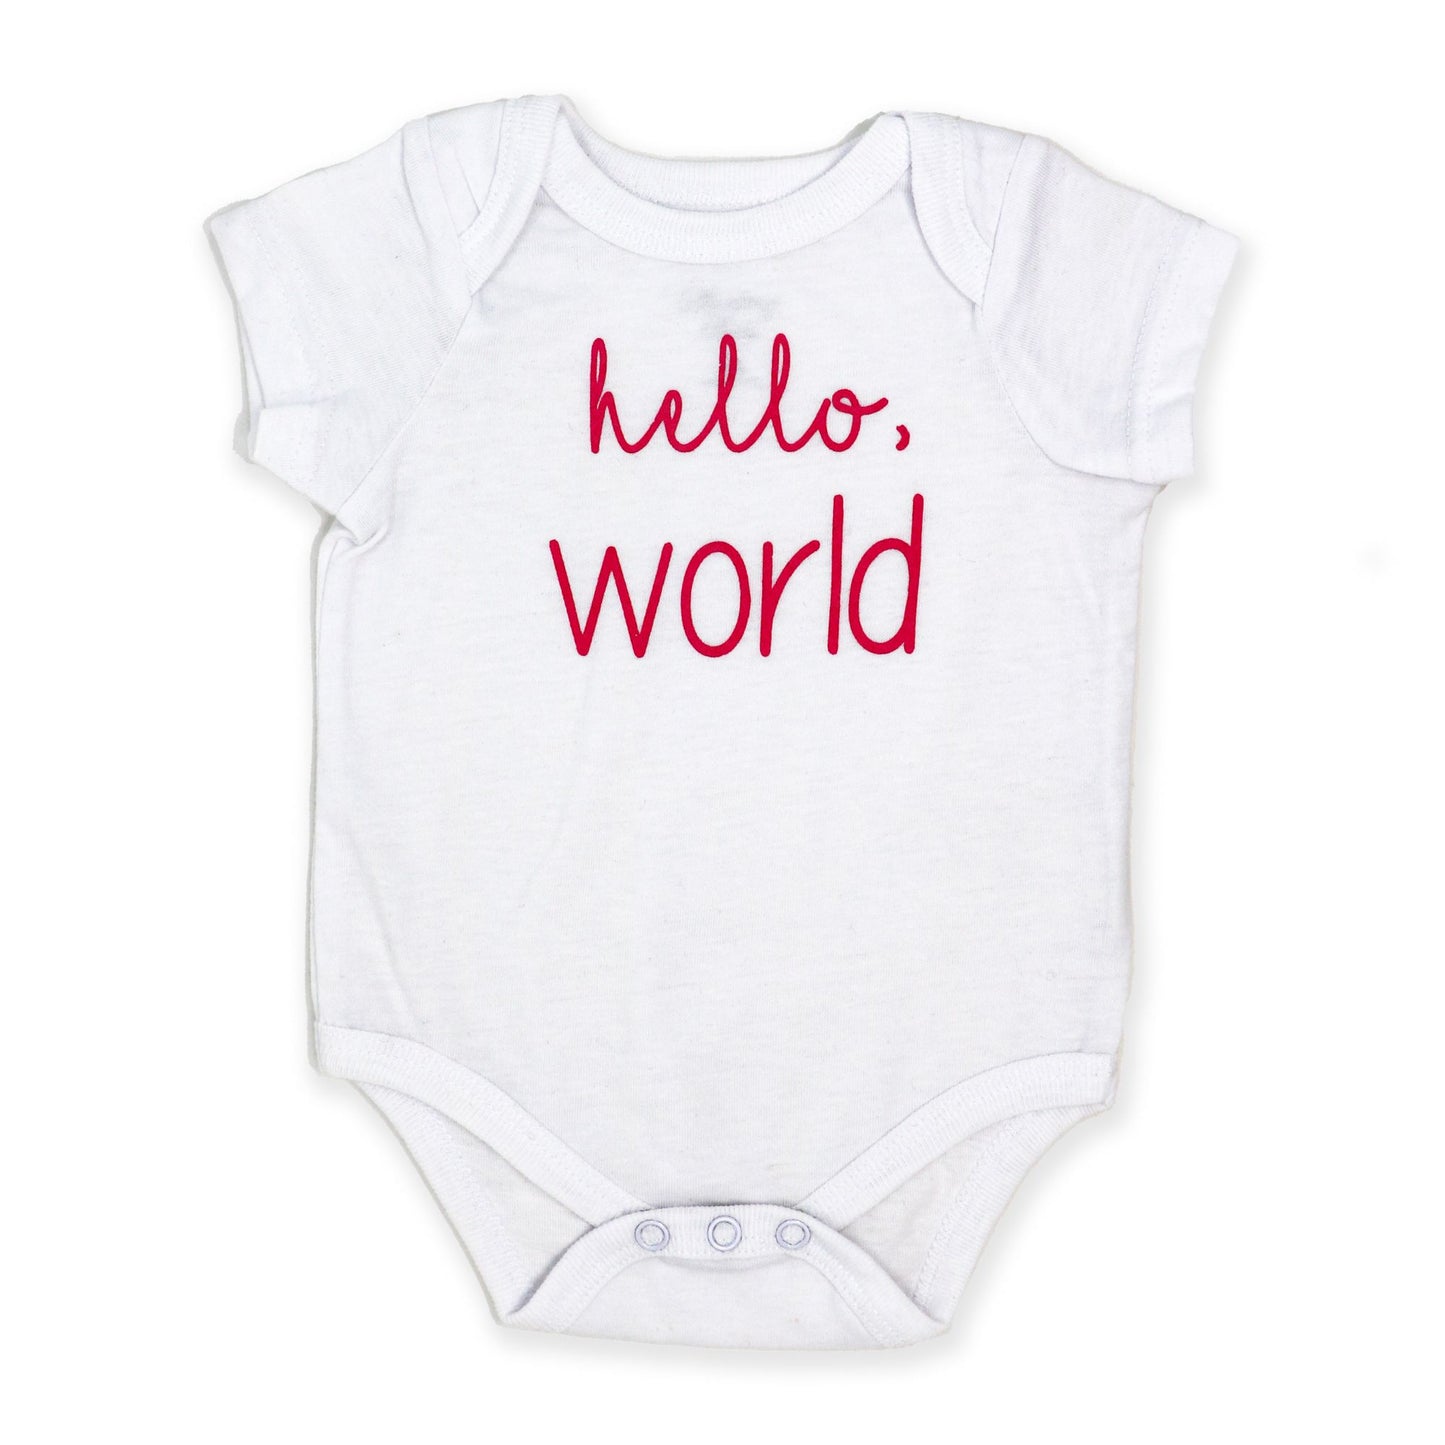 Baby Girl's Bodysuit Set - Hello World